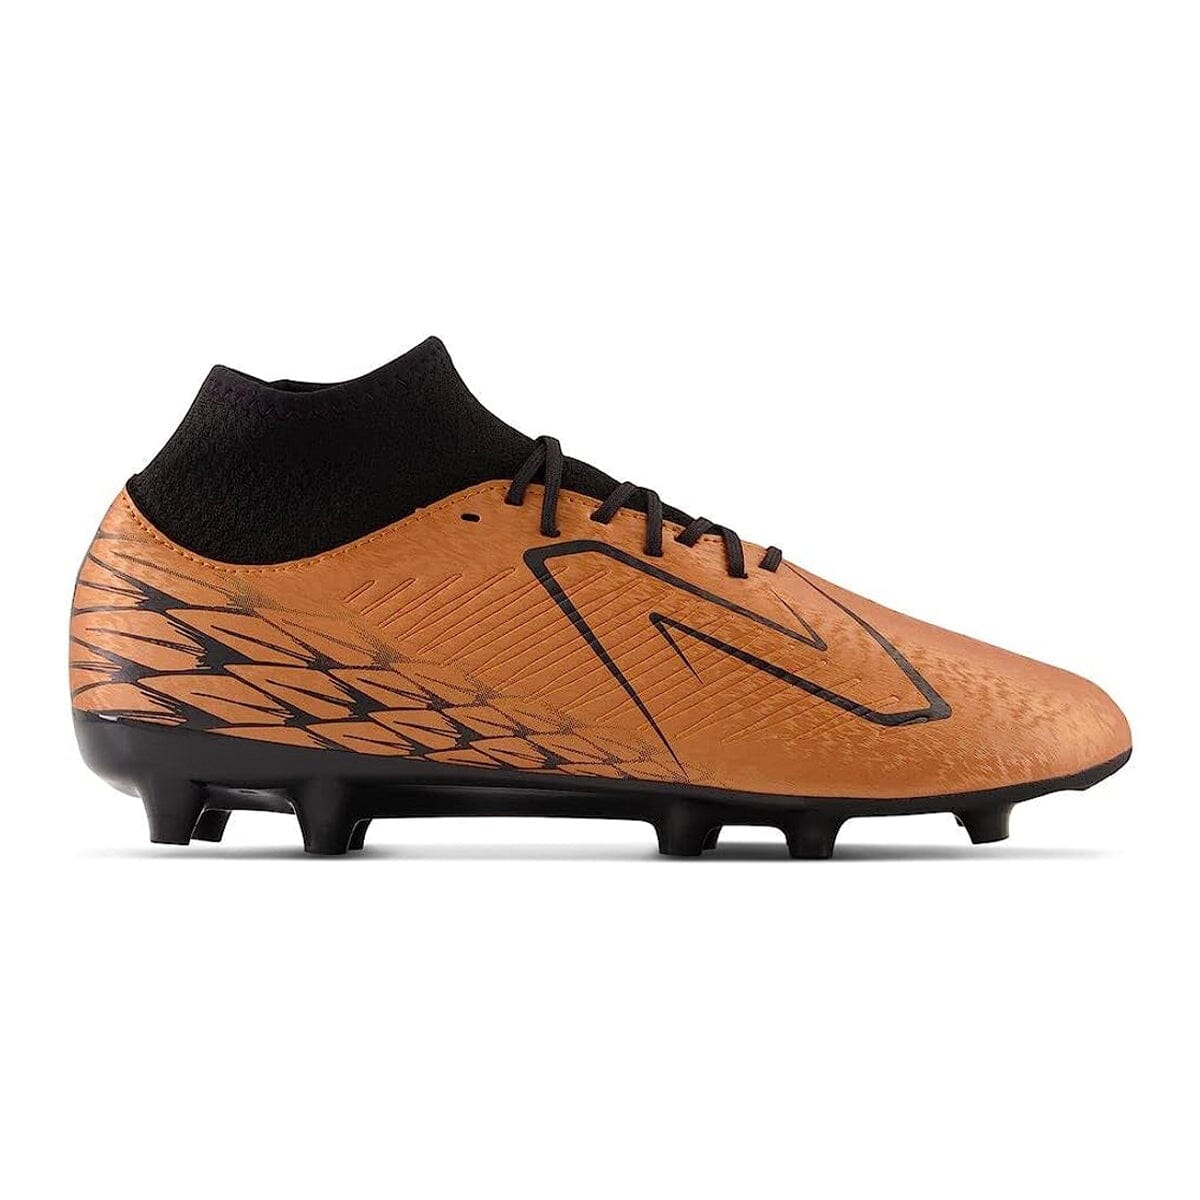 New Balance Men's Tekela V4 Magique FG Soccer Shoe | ST3FCB4 Soccer Shoes New Balance 7.5 D Copper/Black 